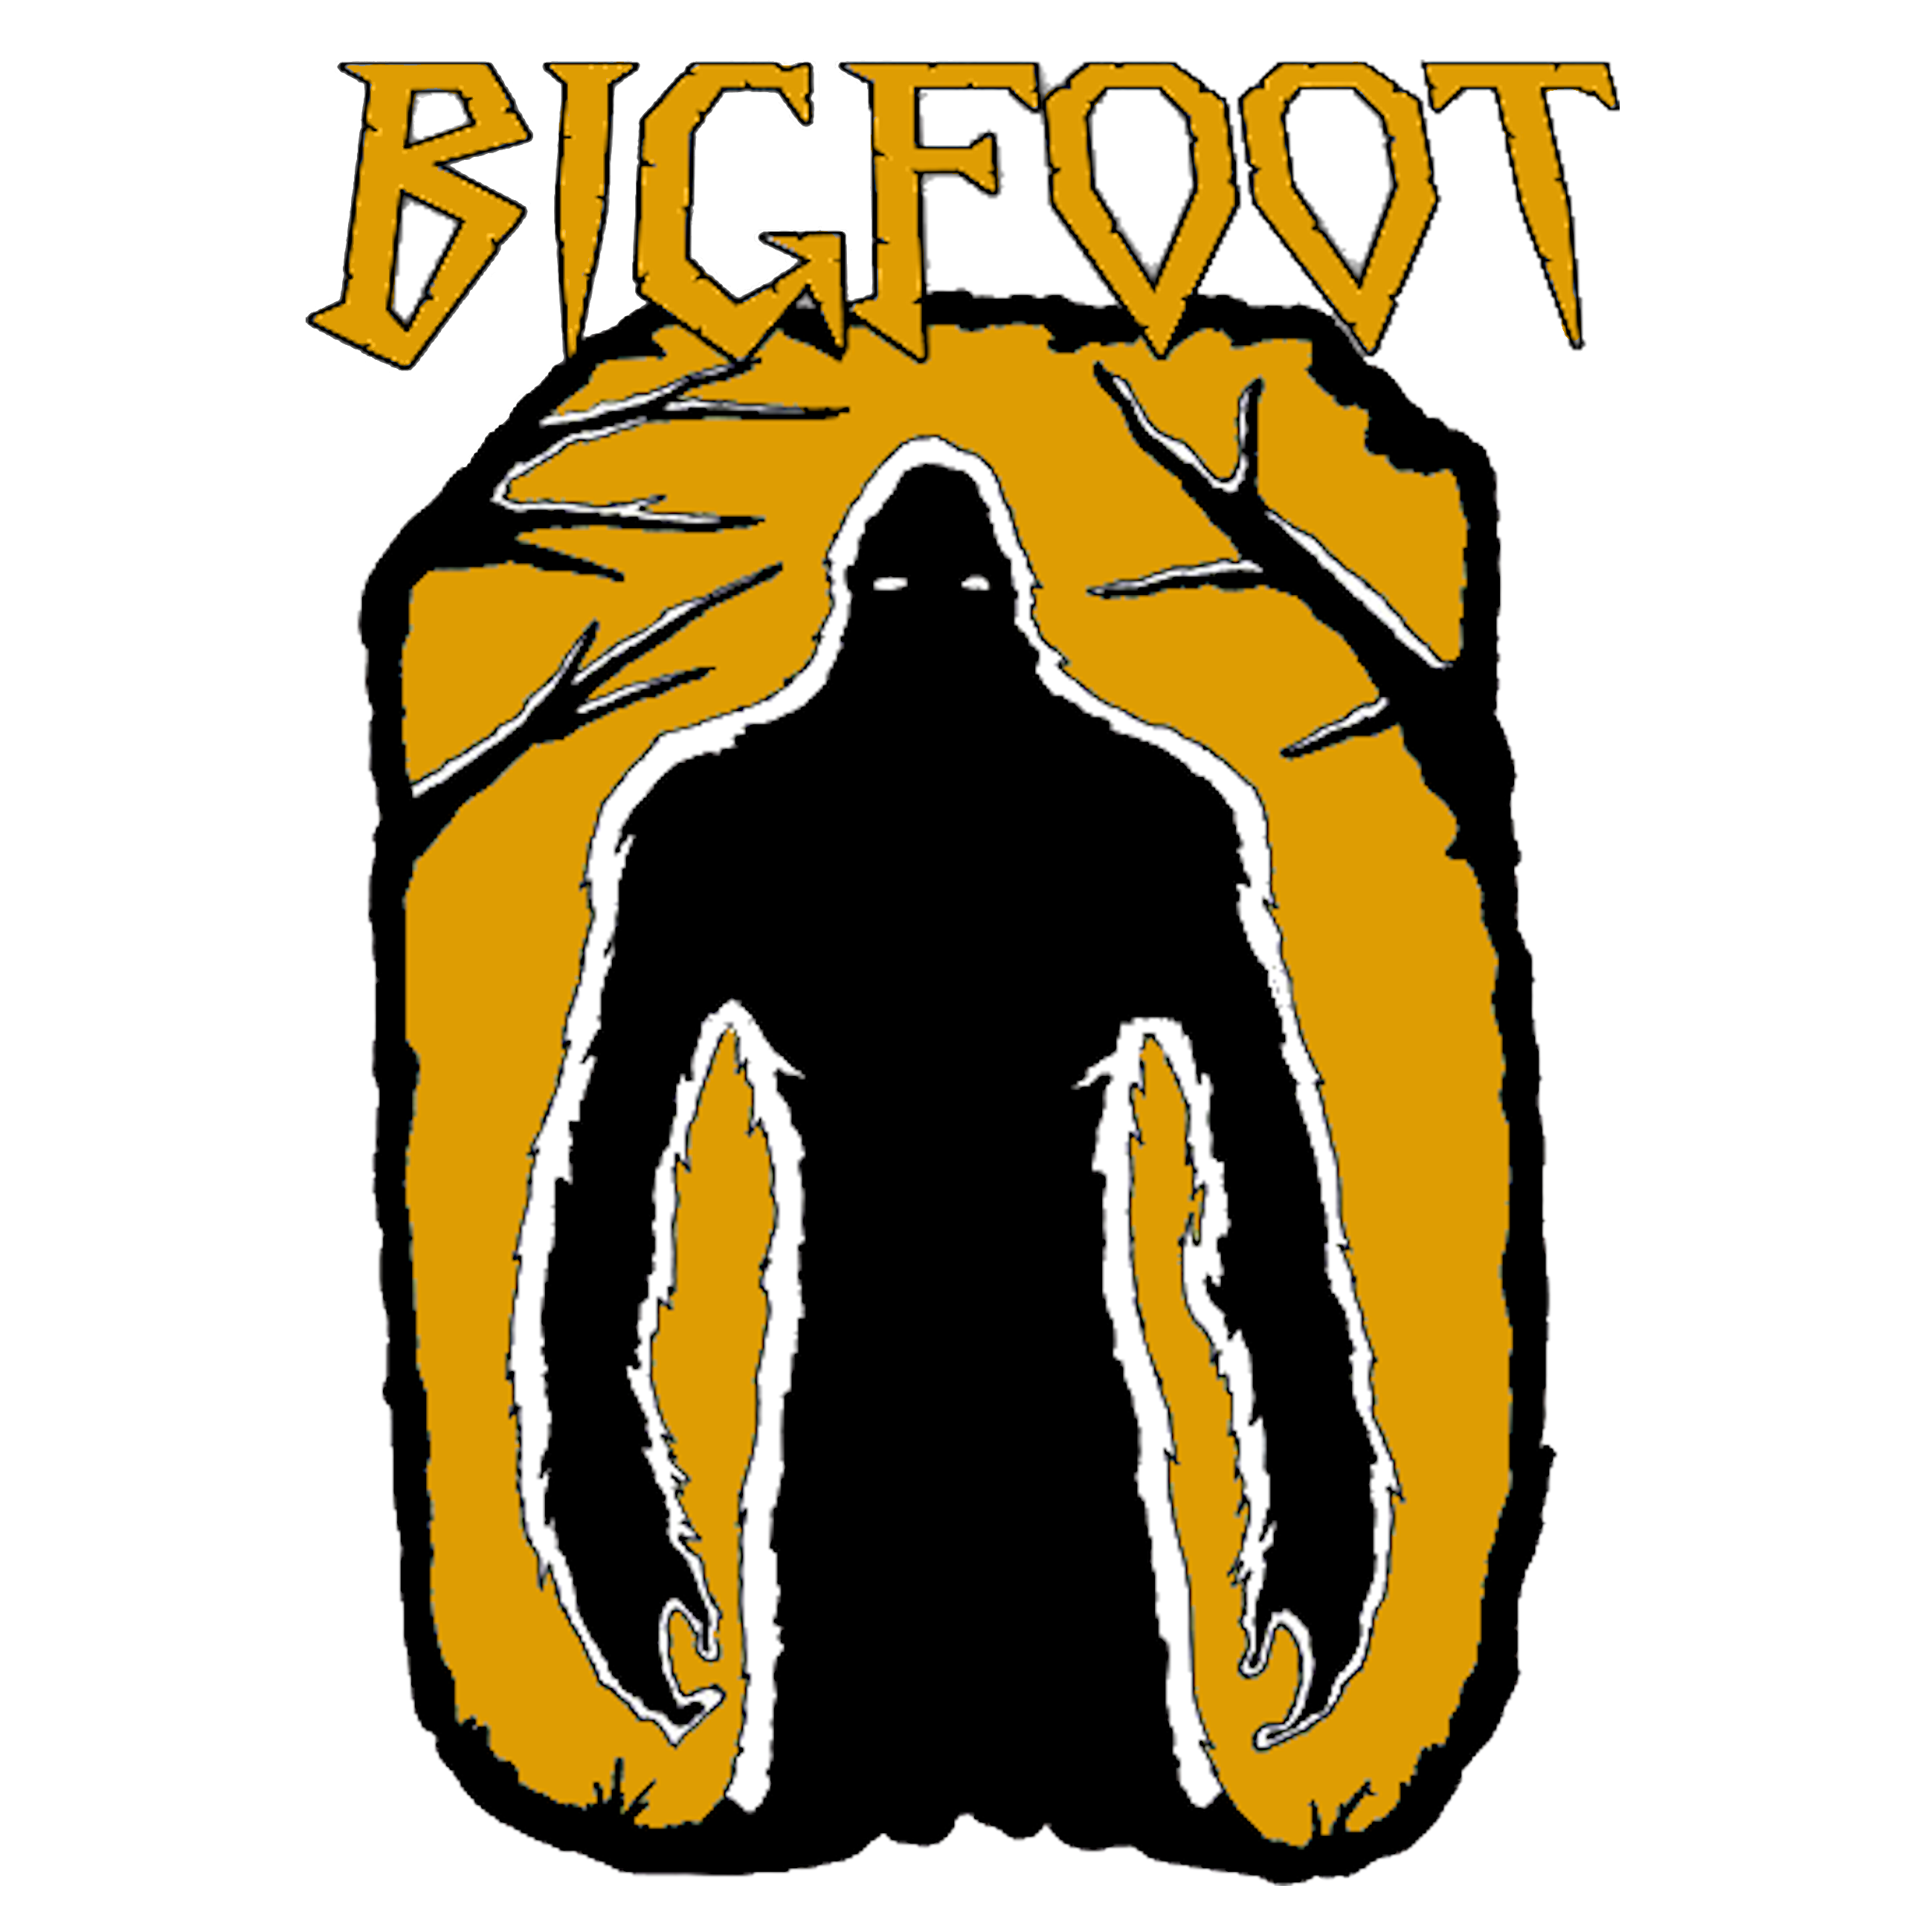 Bigfoot Cut 